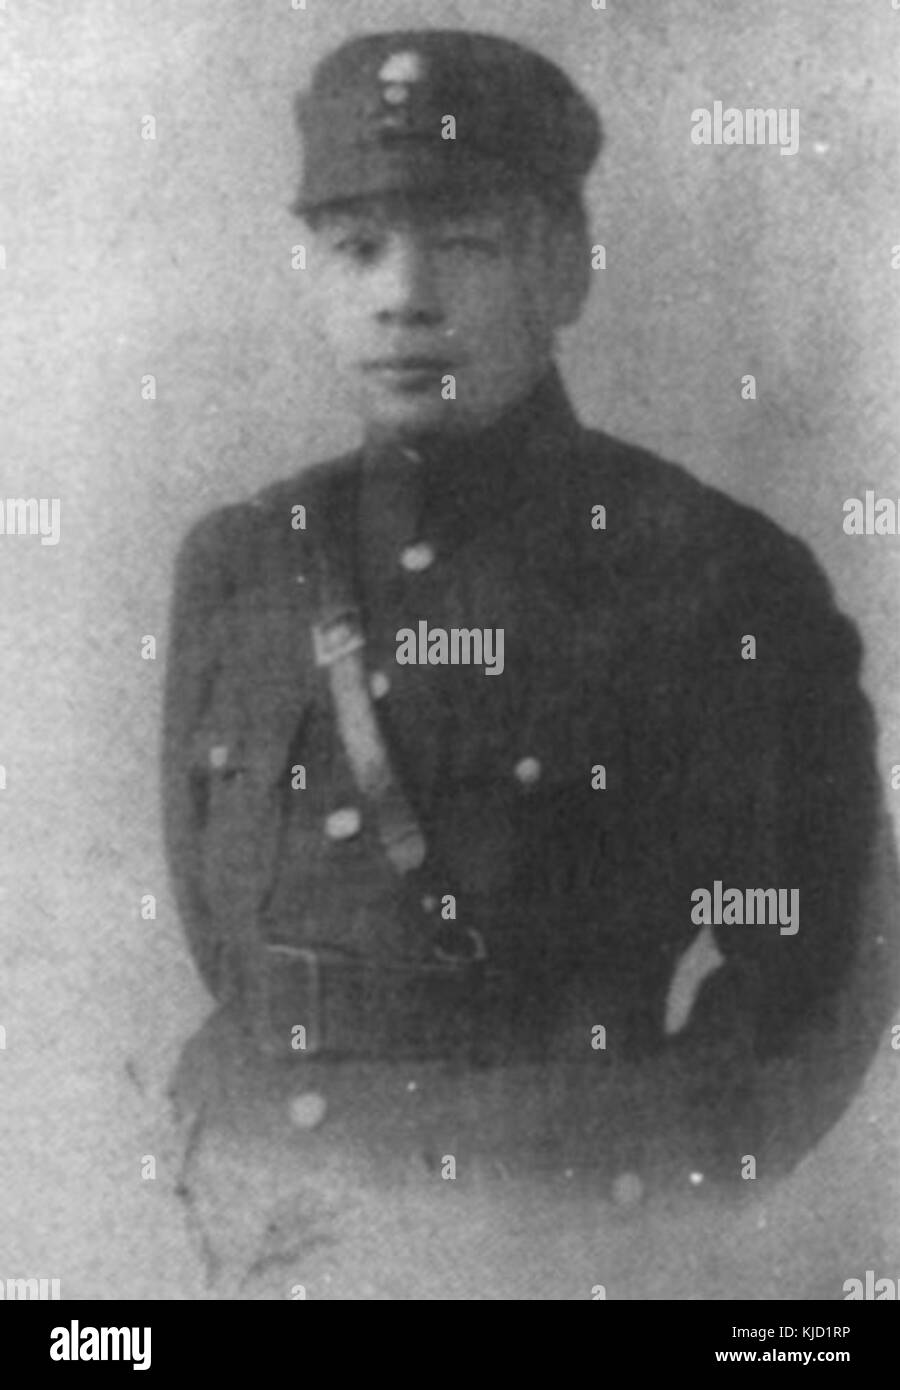 Chiang Ching kuo youth Stock Photo